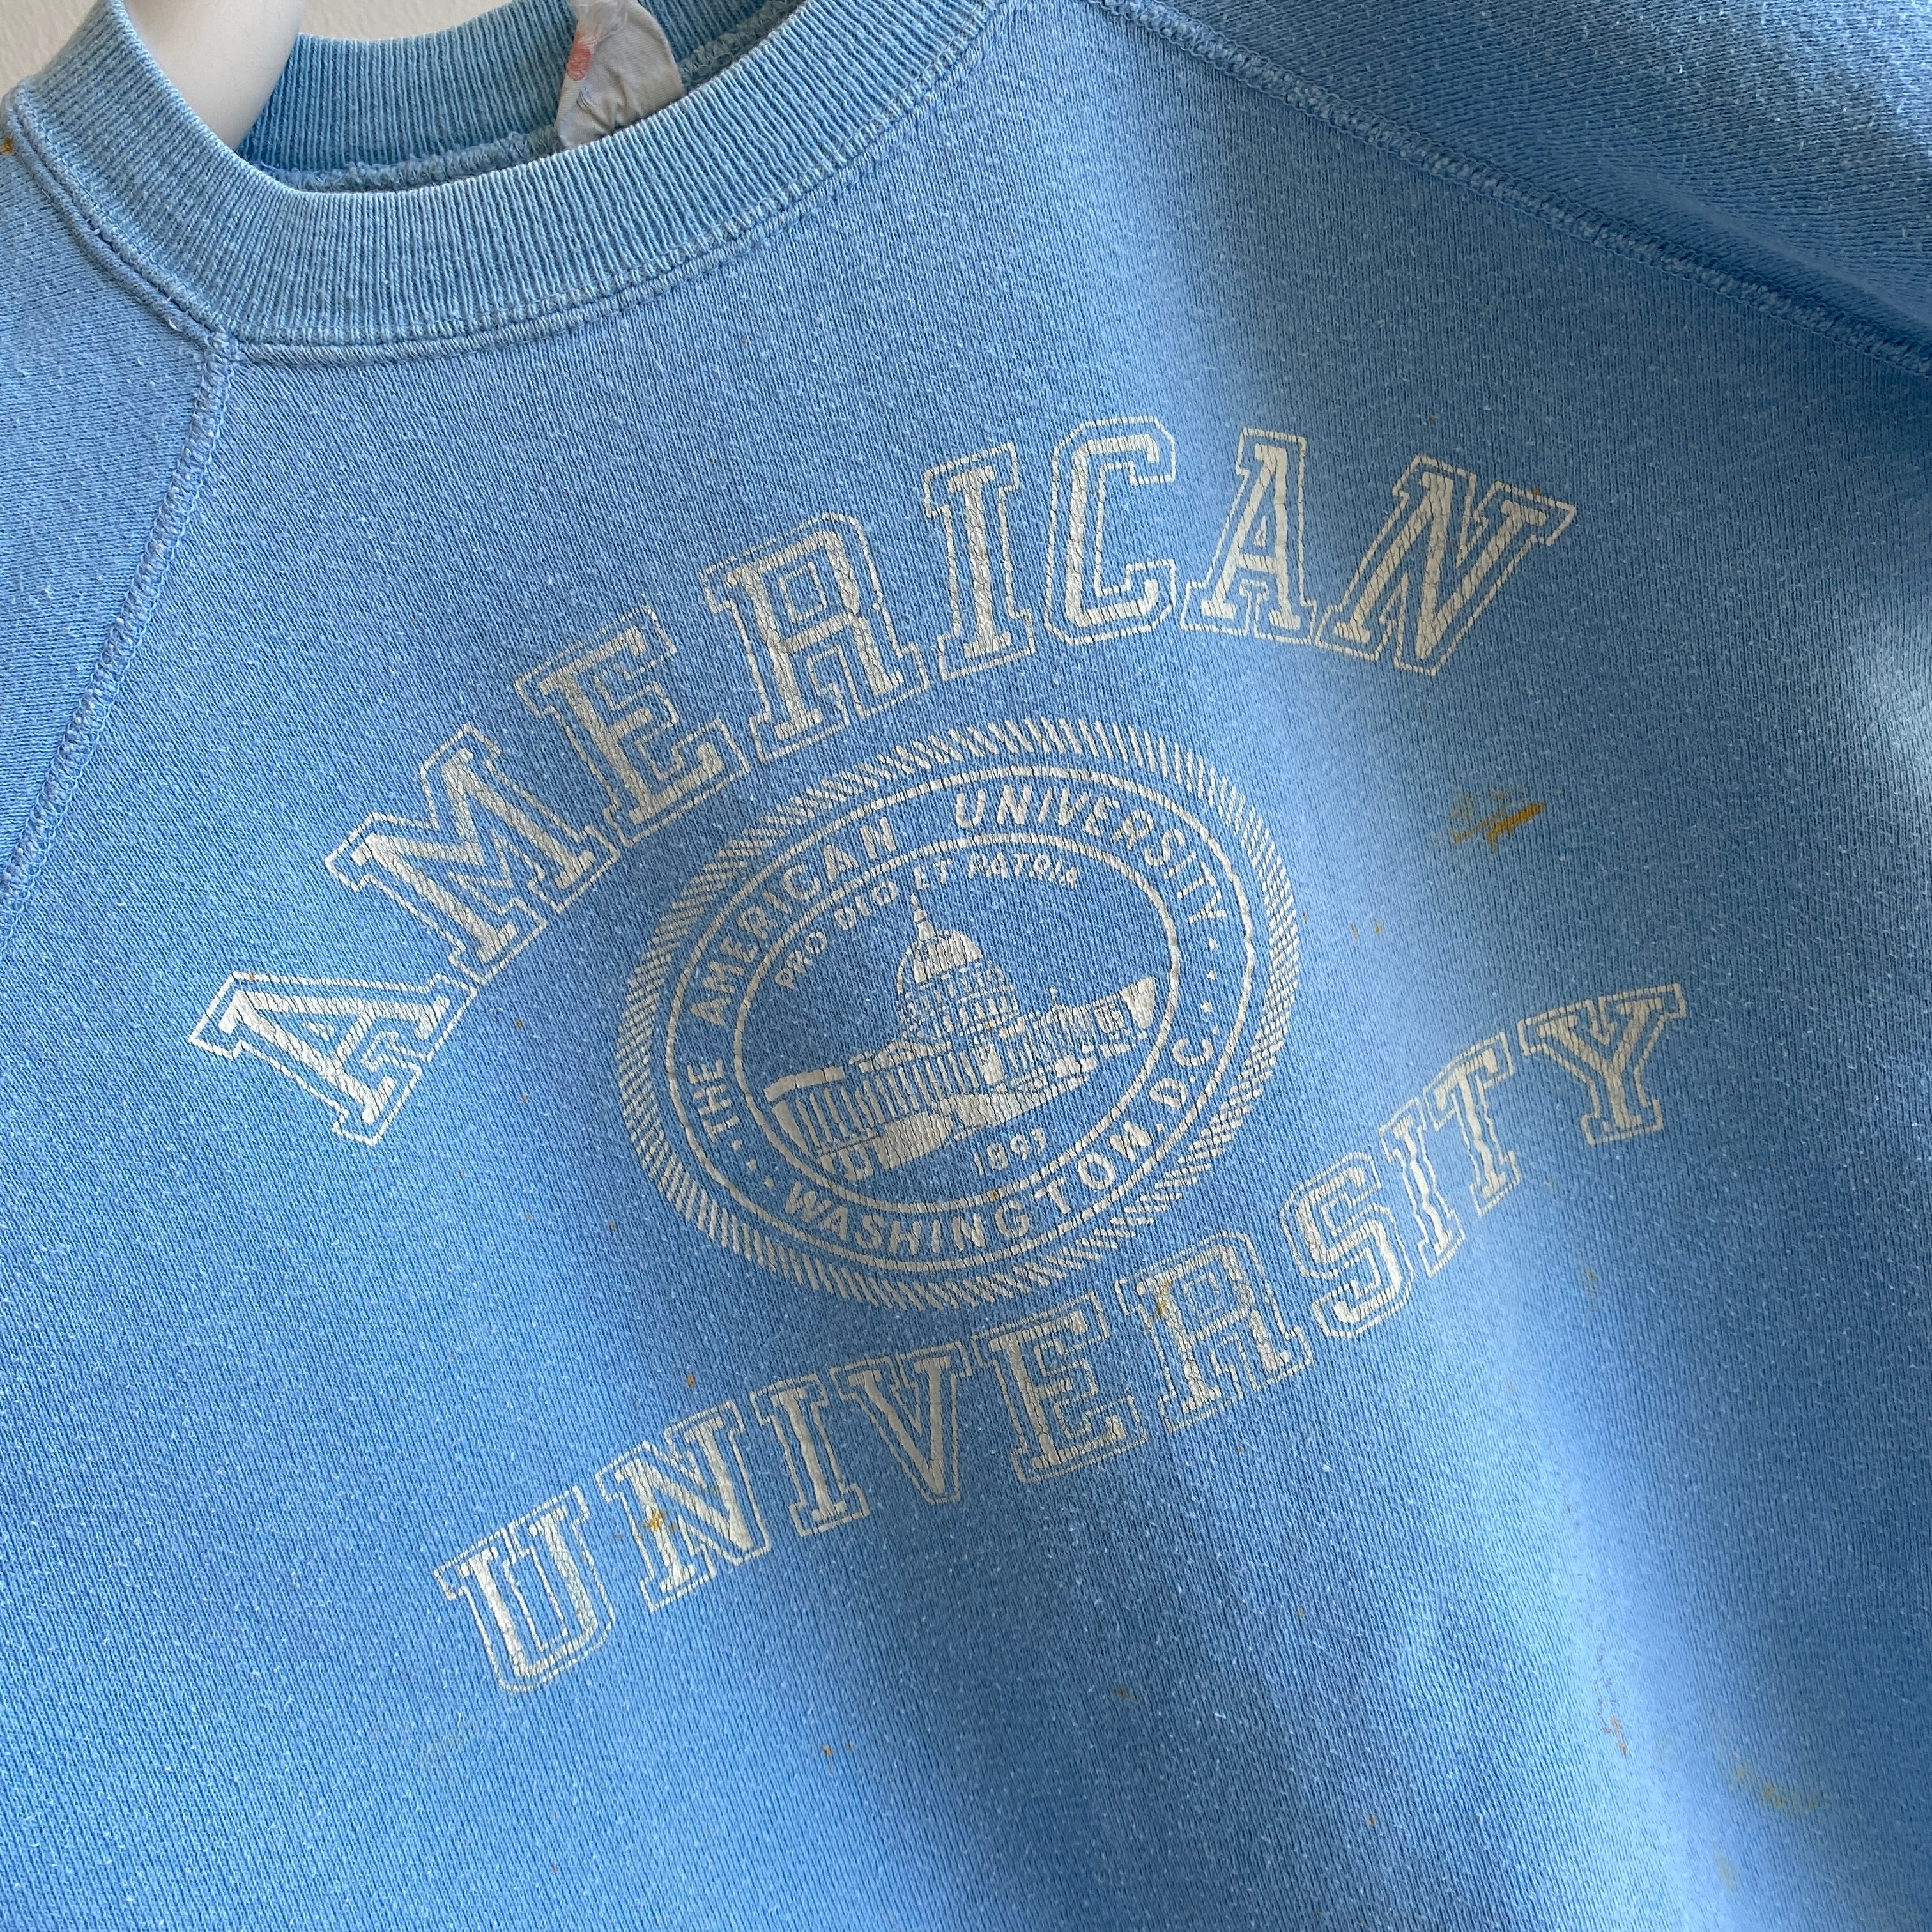 1970s American University Cut Sleeve Double Arm Gusset Warm Up Sweatshirt